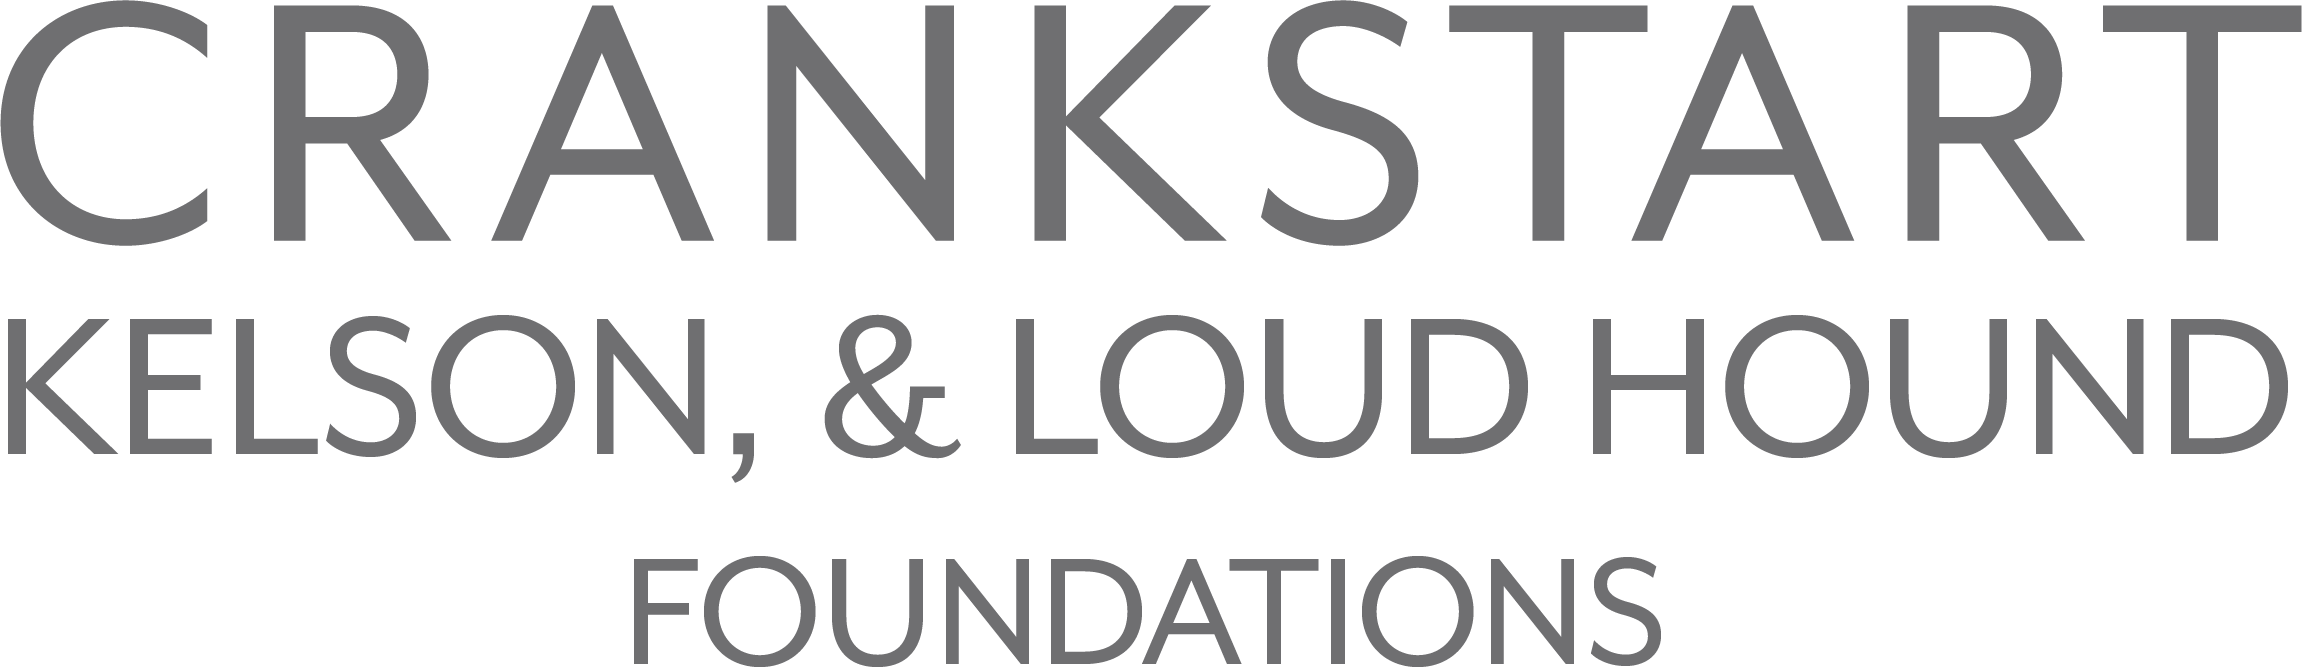 Crankstart, Kelson, & Loud Hound Foundations